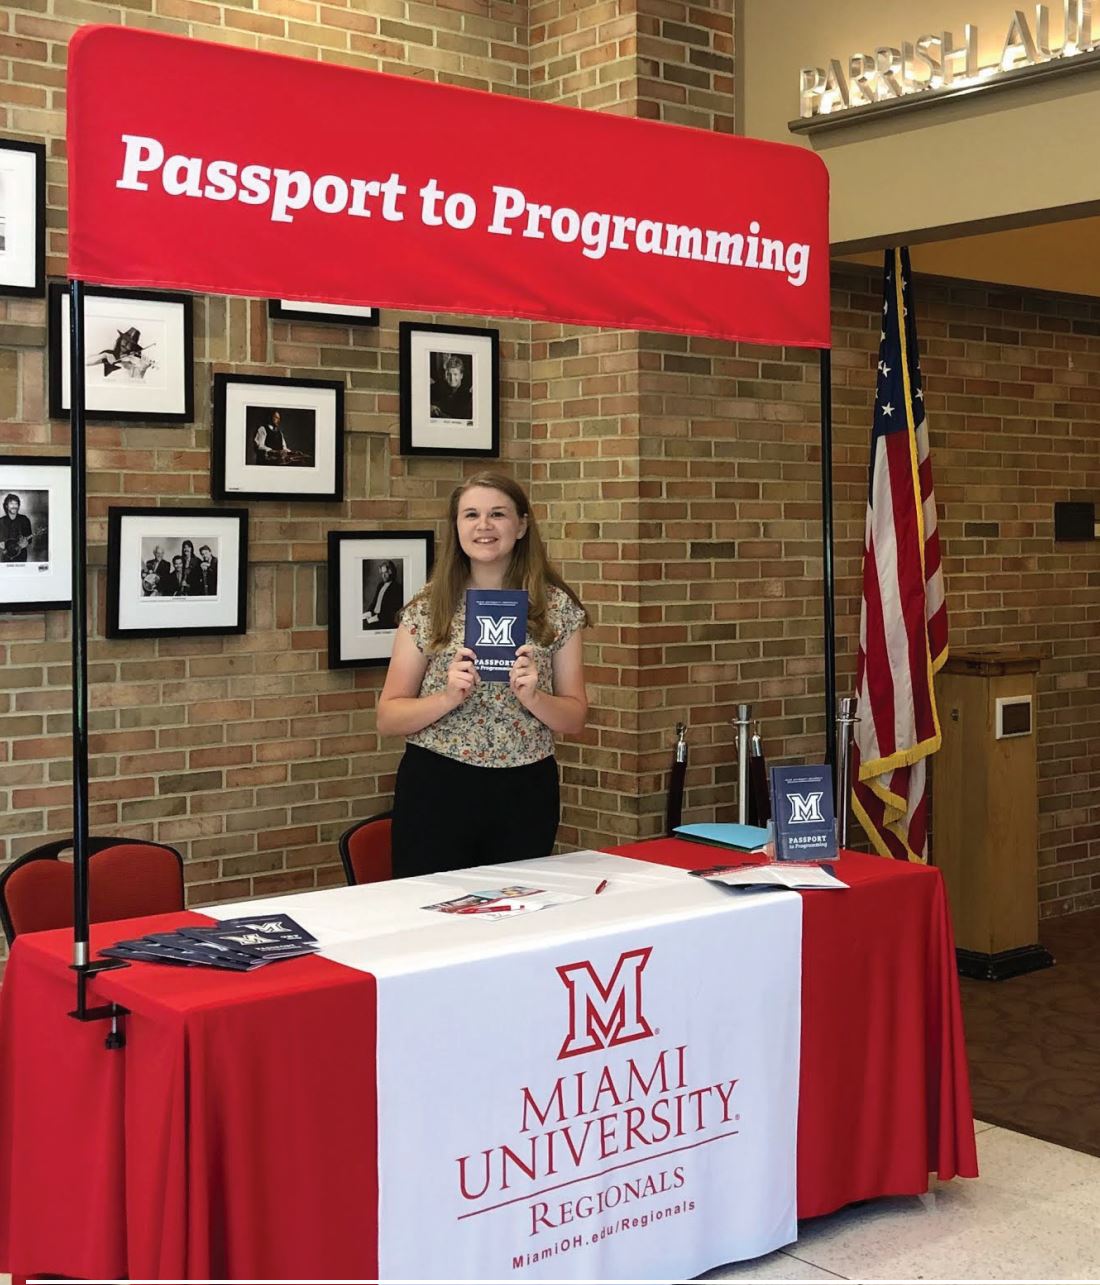 Miami University Regionals Passport to Programming